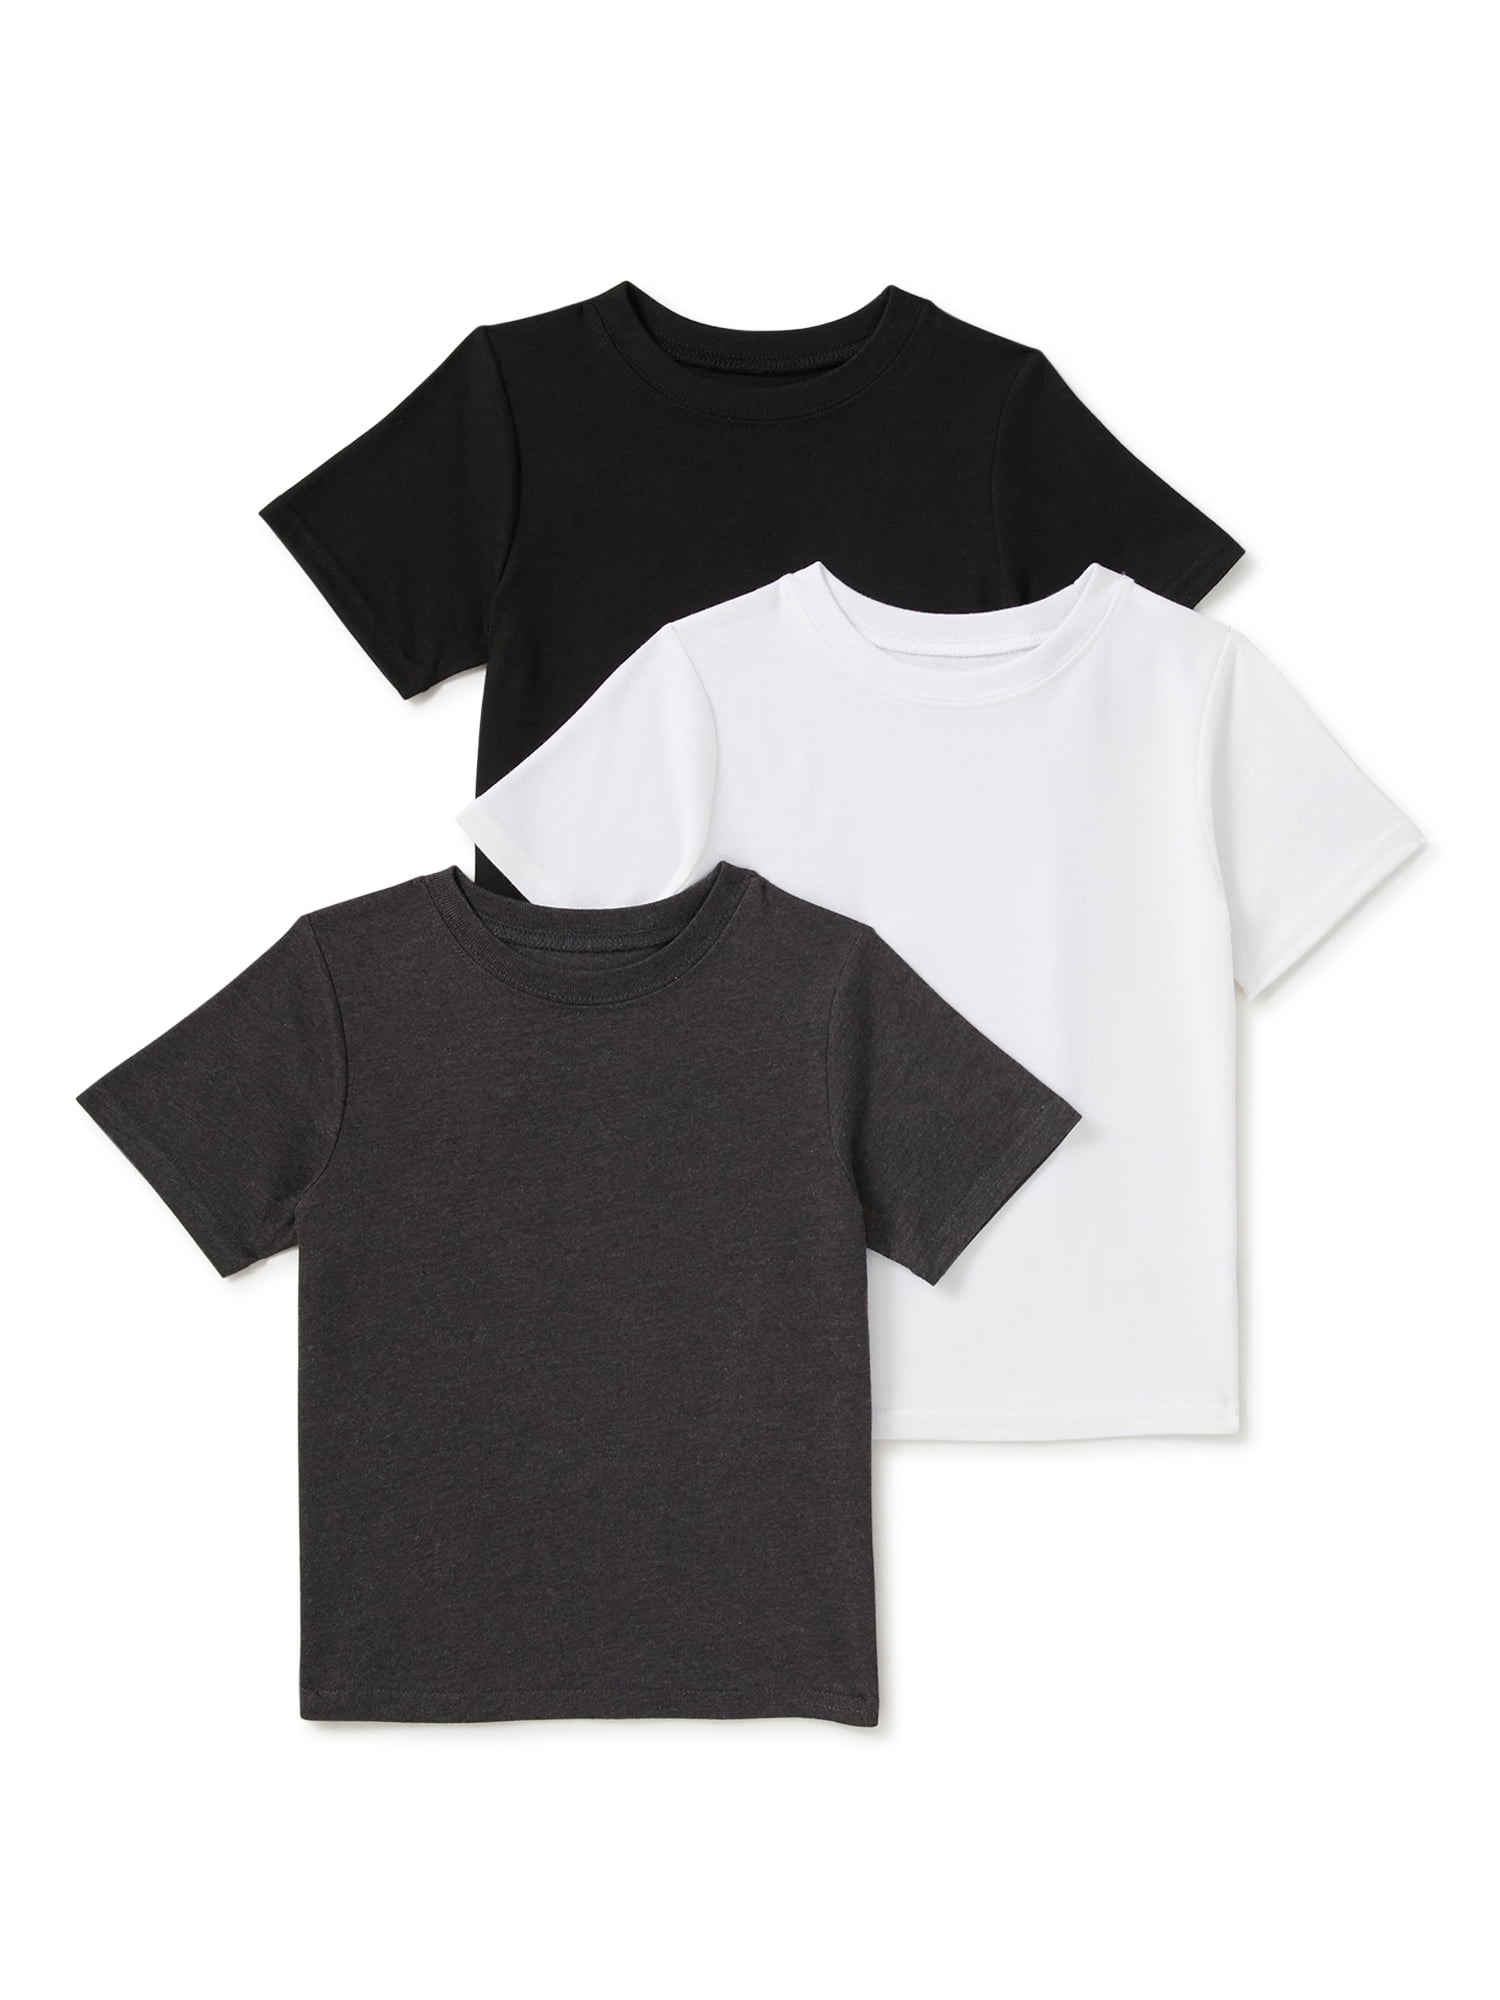 Boys Girls Kids T-Shirts Plain Soft Cotton Round Neck T-Shirt PE School Uniform 